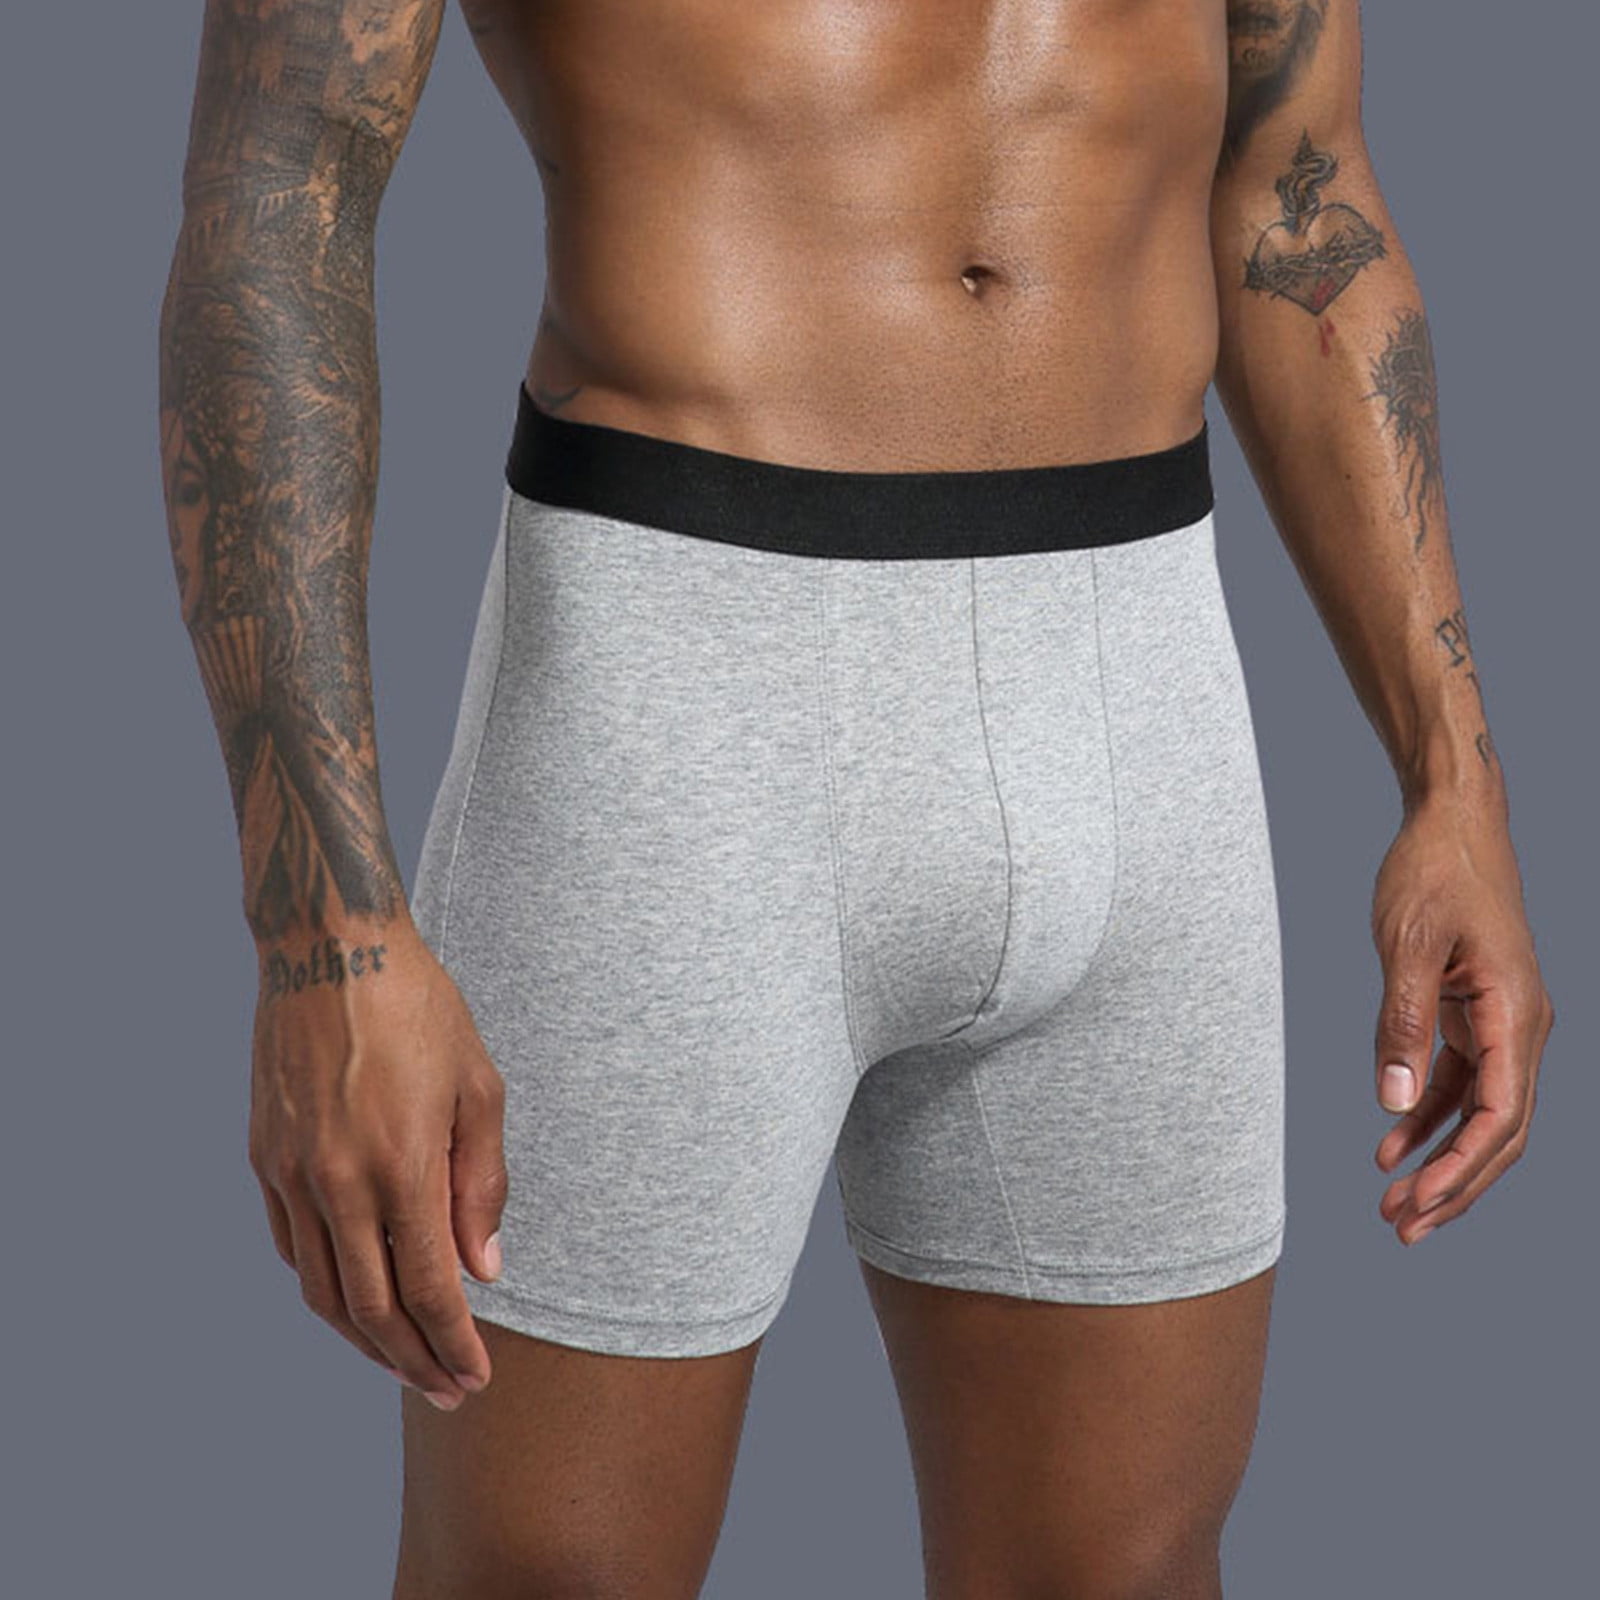 MaFYtyTPR Black & Friday Deals Men's Boxer Briefs Big & Tall Sizes  Clearance Men's Underwear Cotton Large Size Men's Boxer Underpants Extra  Long Sport Solid Color 